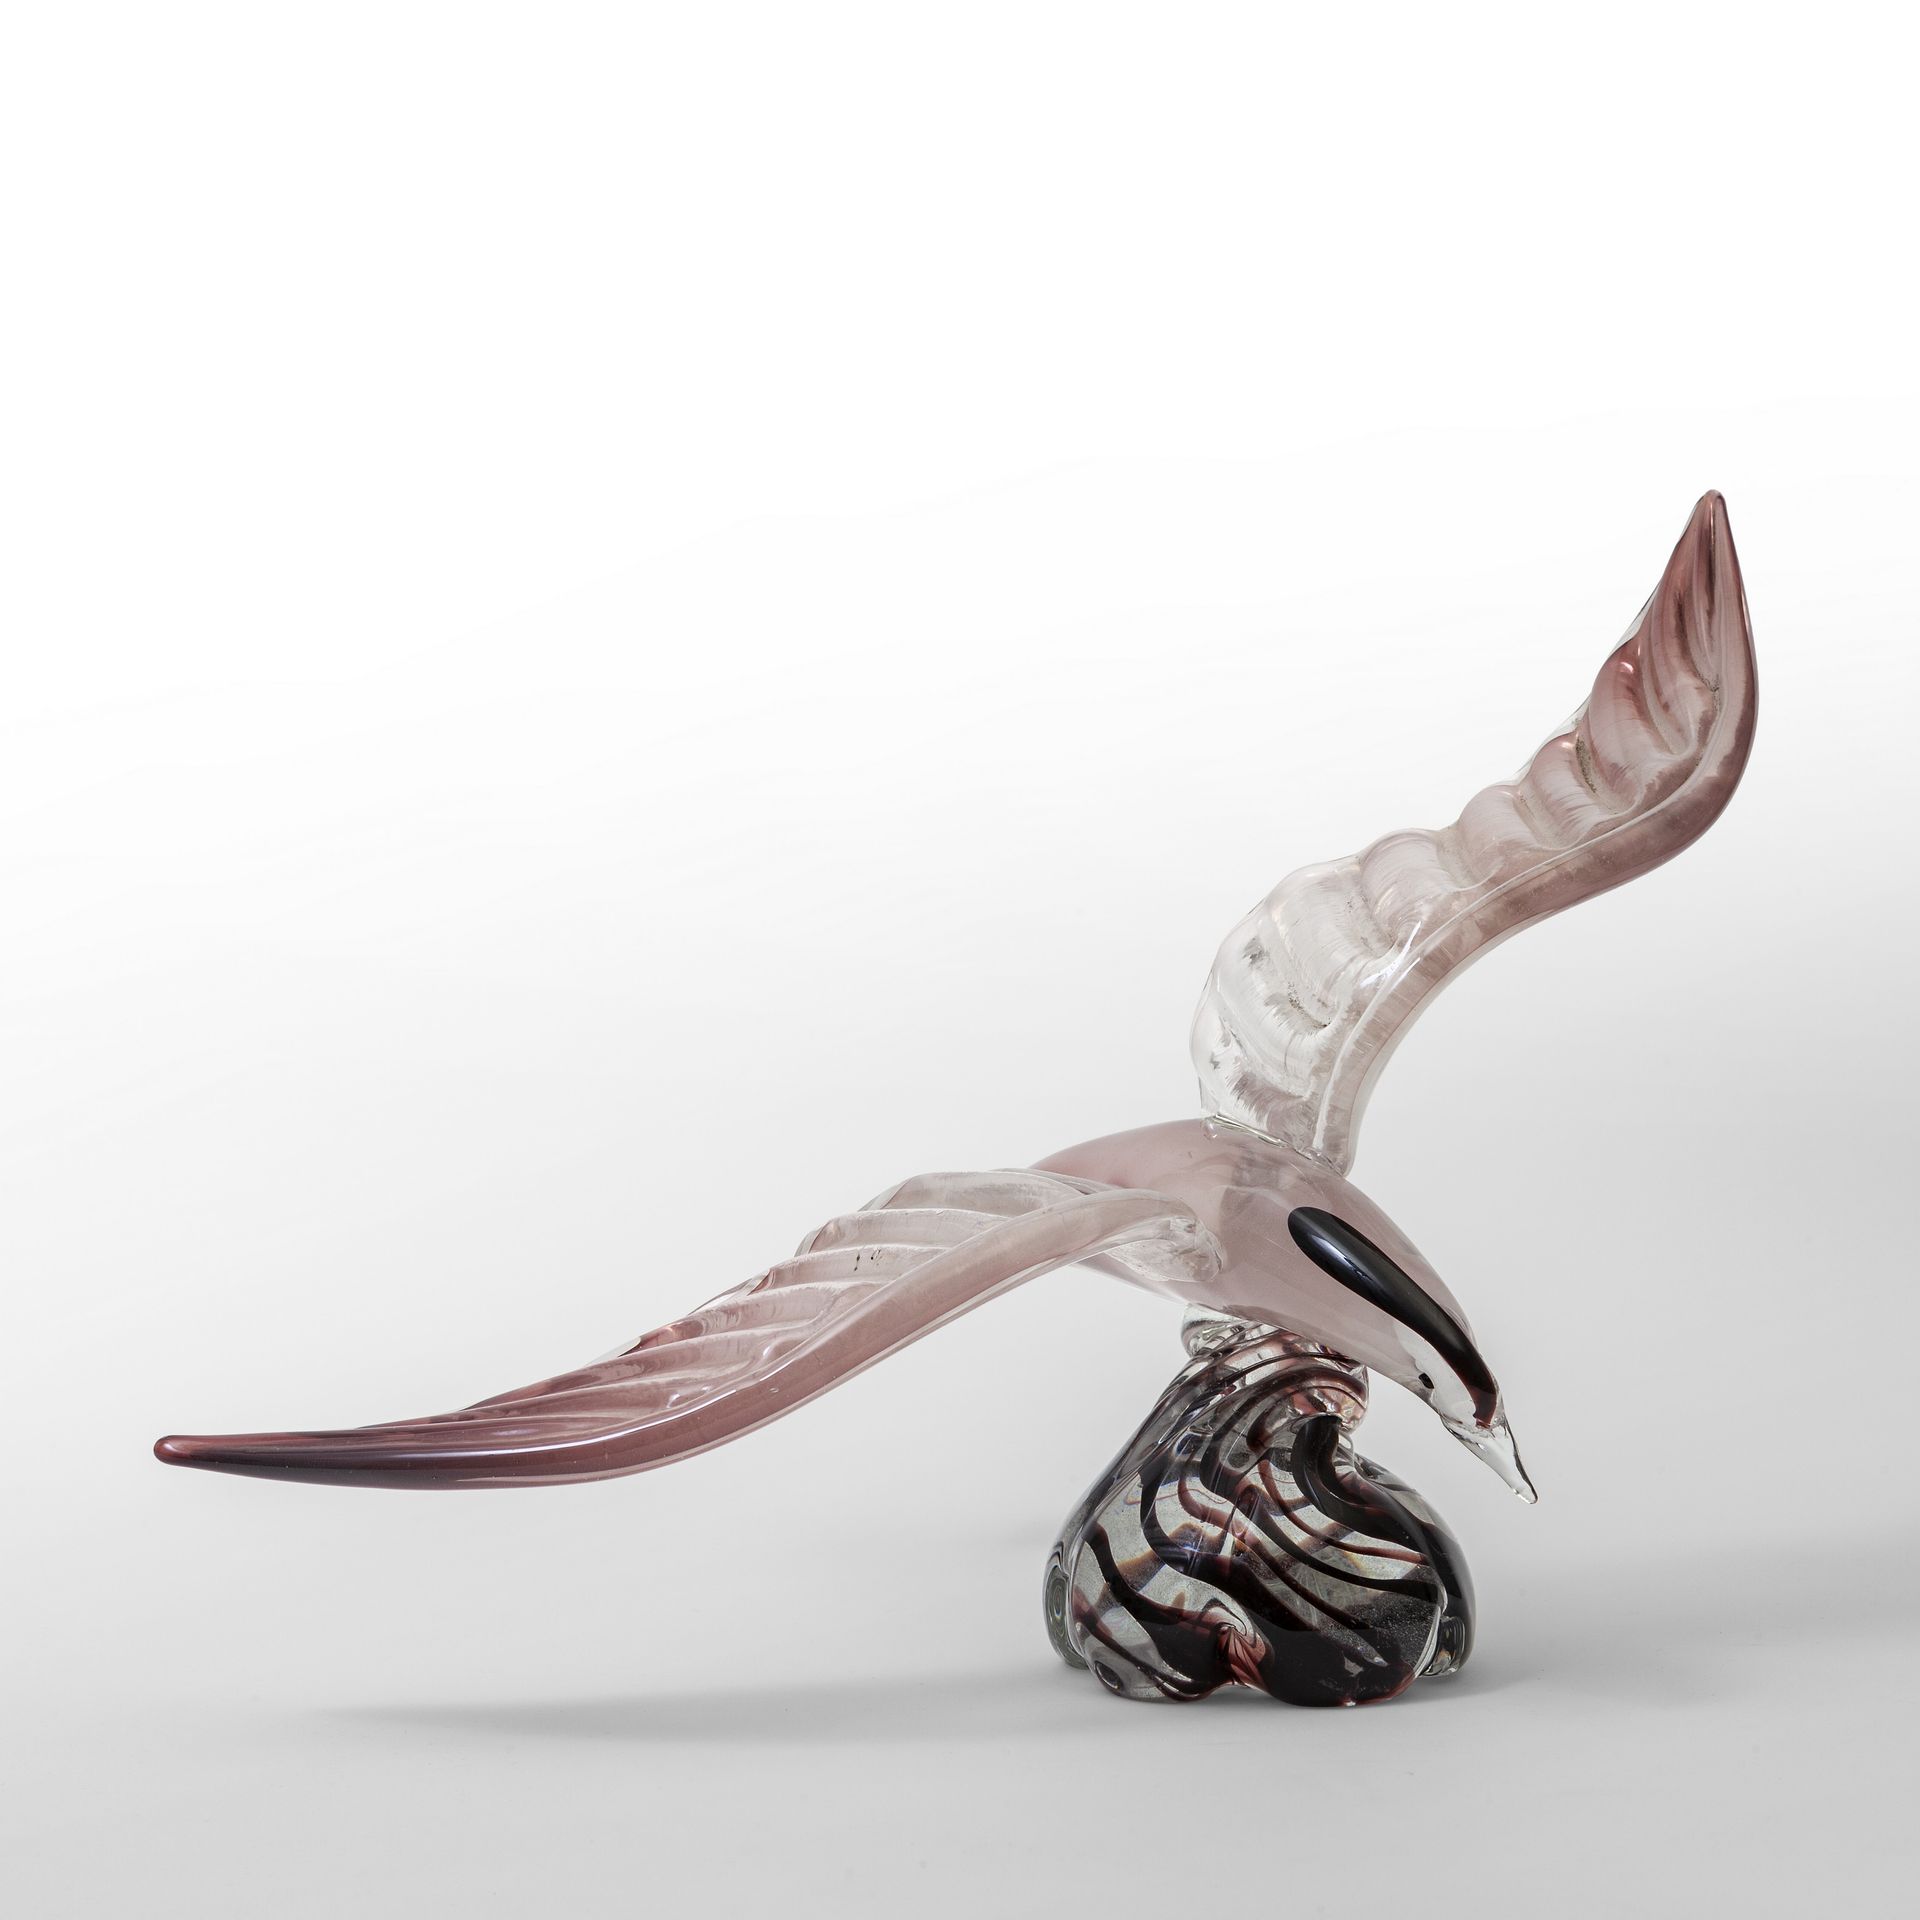 BARBINI ALFREDO ALFREDO BARBINI V.A.M.S.A.
Figura de una gaviota en vuelo alrede&hellip;